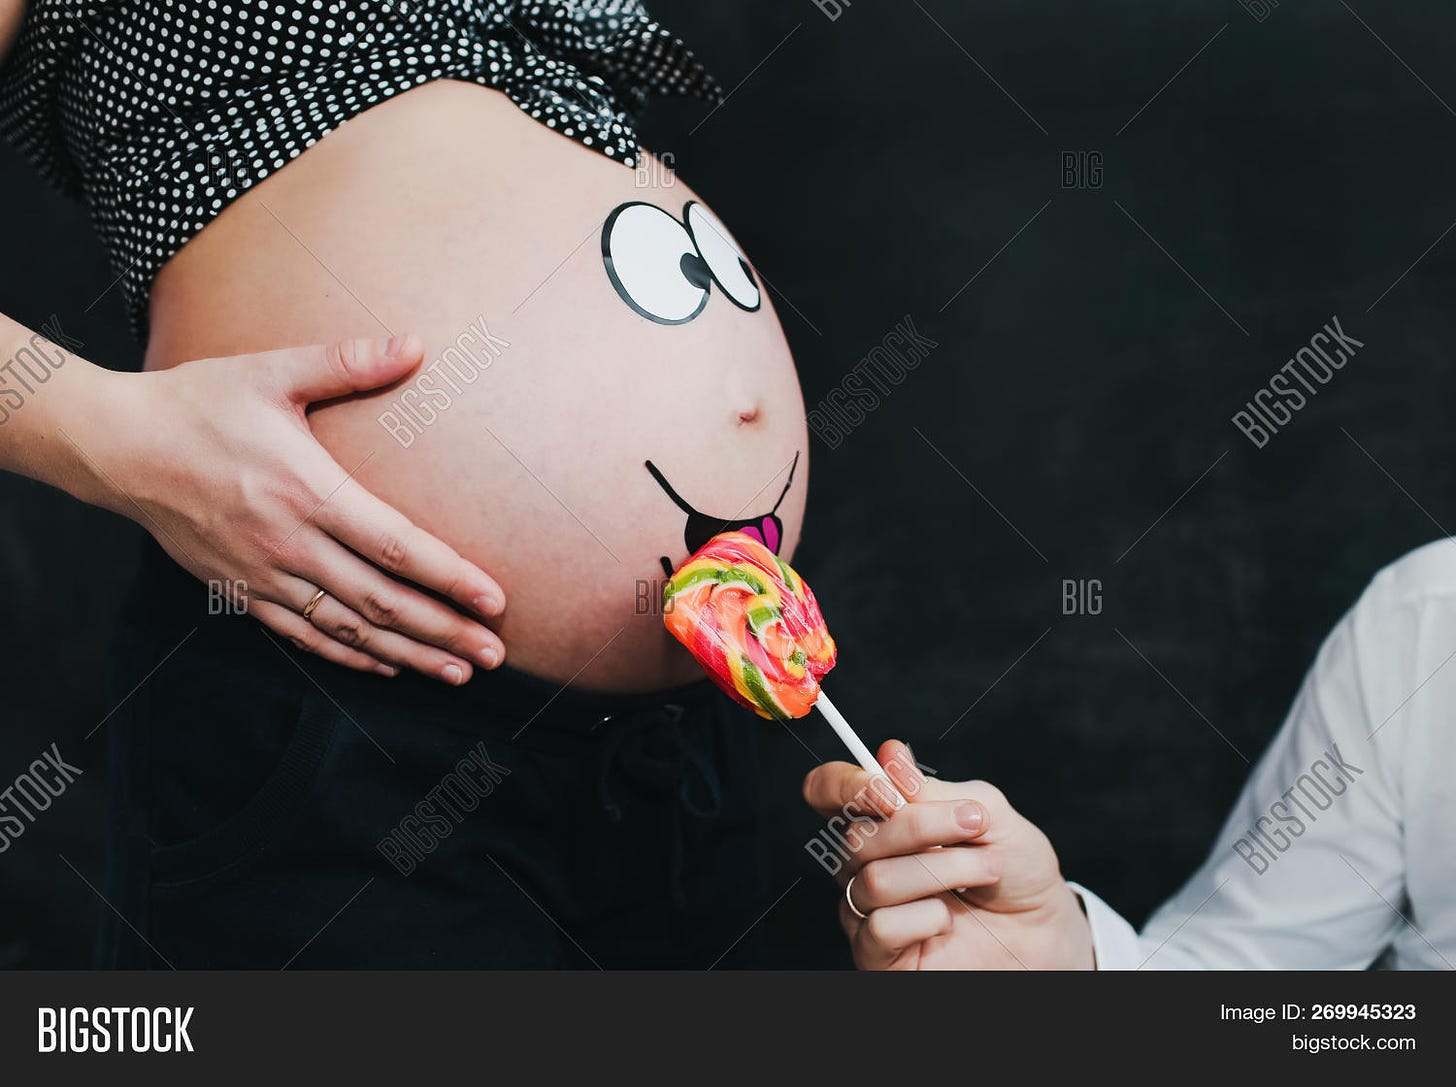 Funny Pregnant Woman Image & Photo (Free Trial) | Bigstock